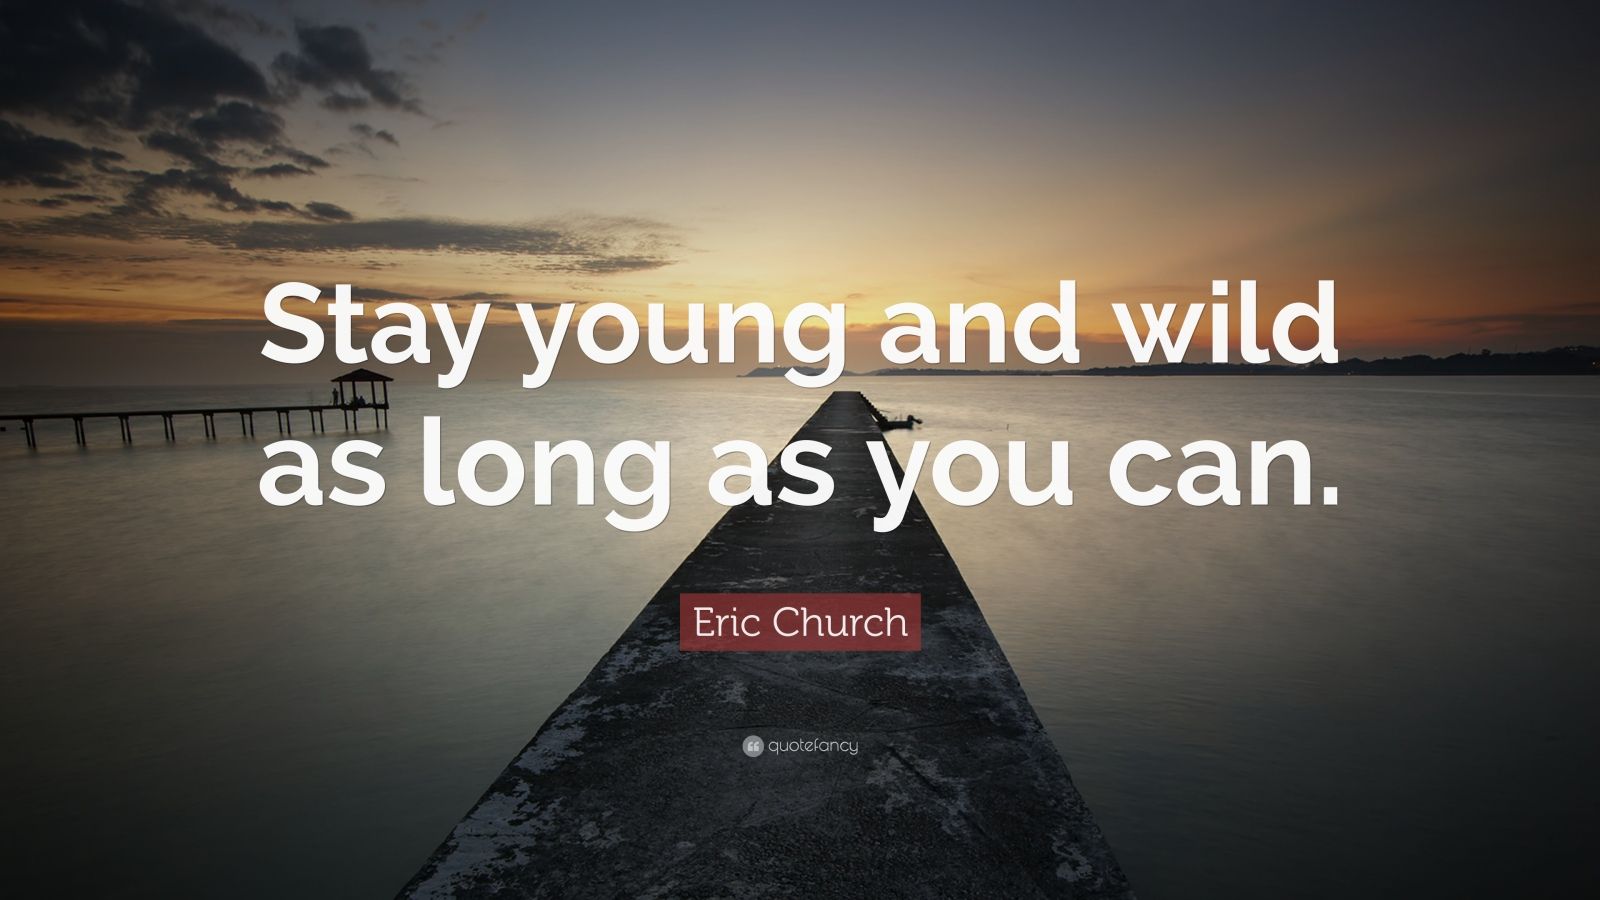 Top 40 Eric Church Quotes (2021 Update) - Quotefancy